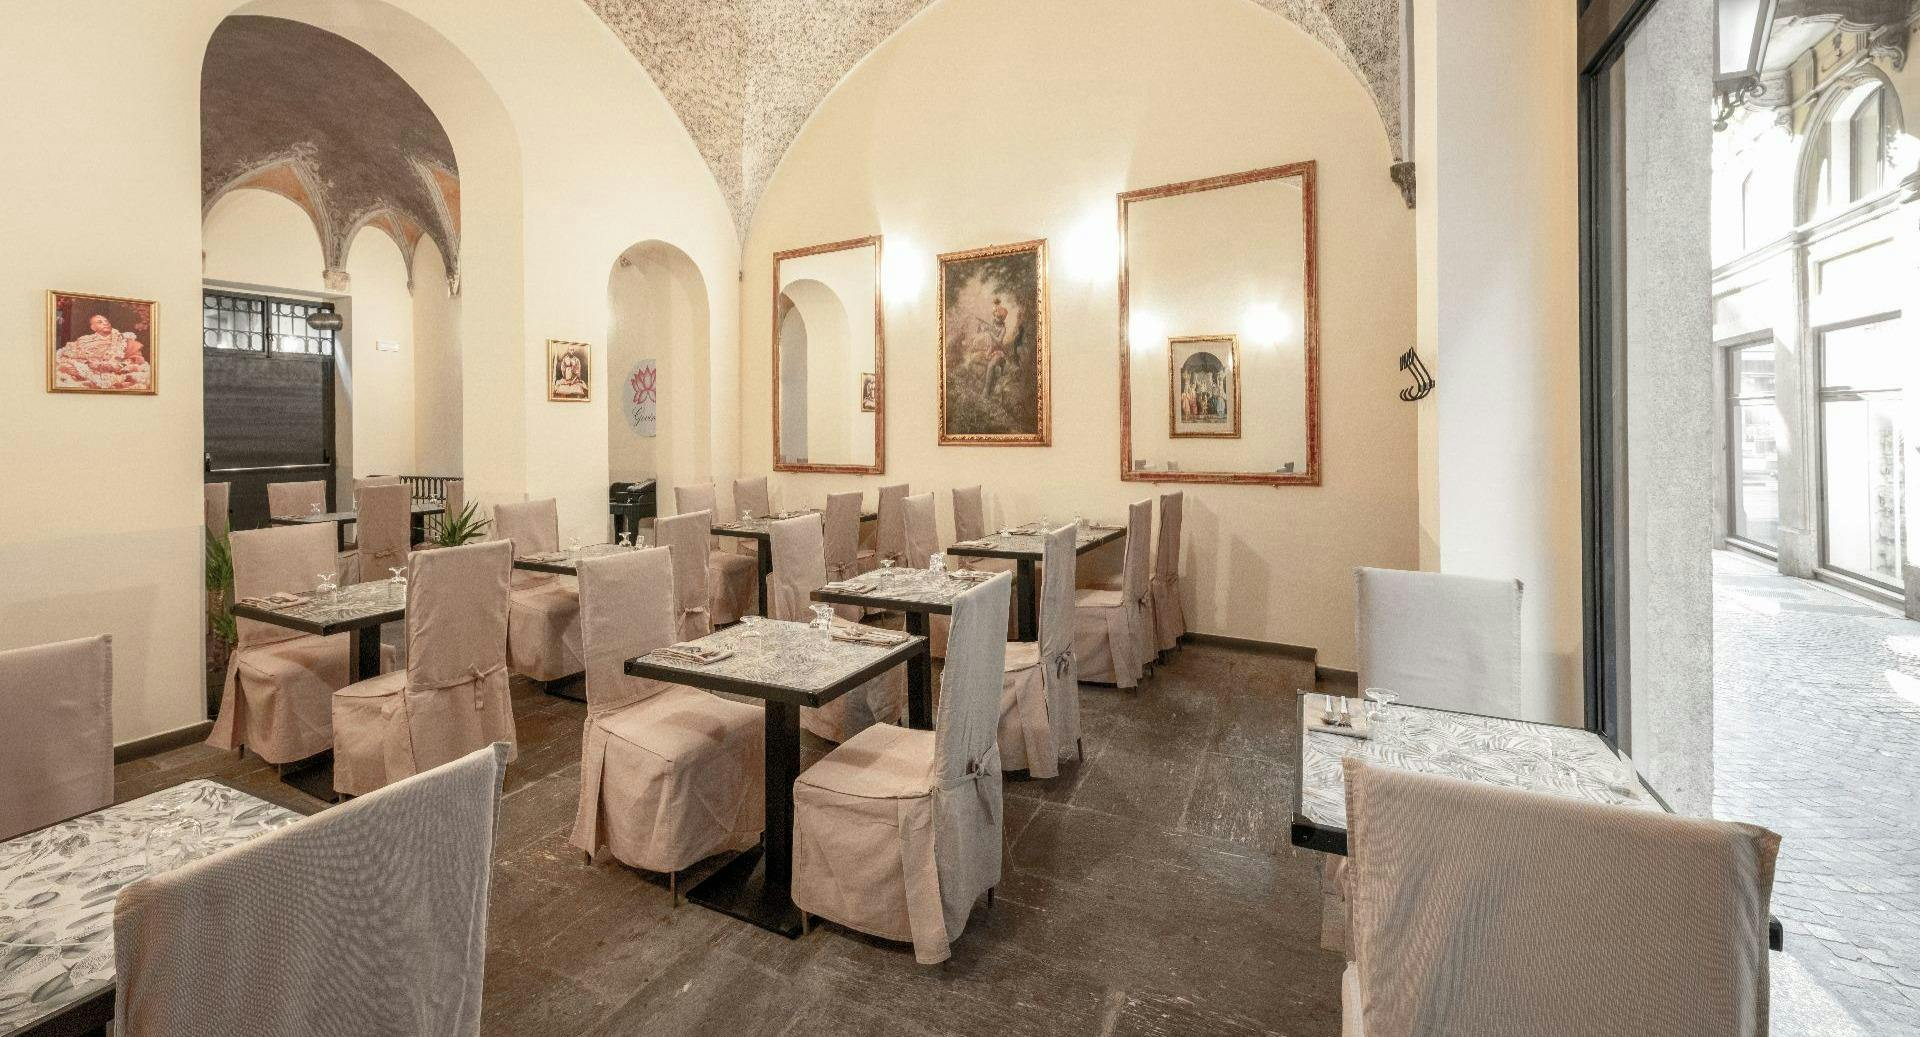 Photo of restaurant Govinda in Centre, Rome